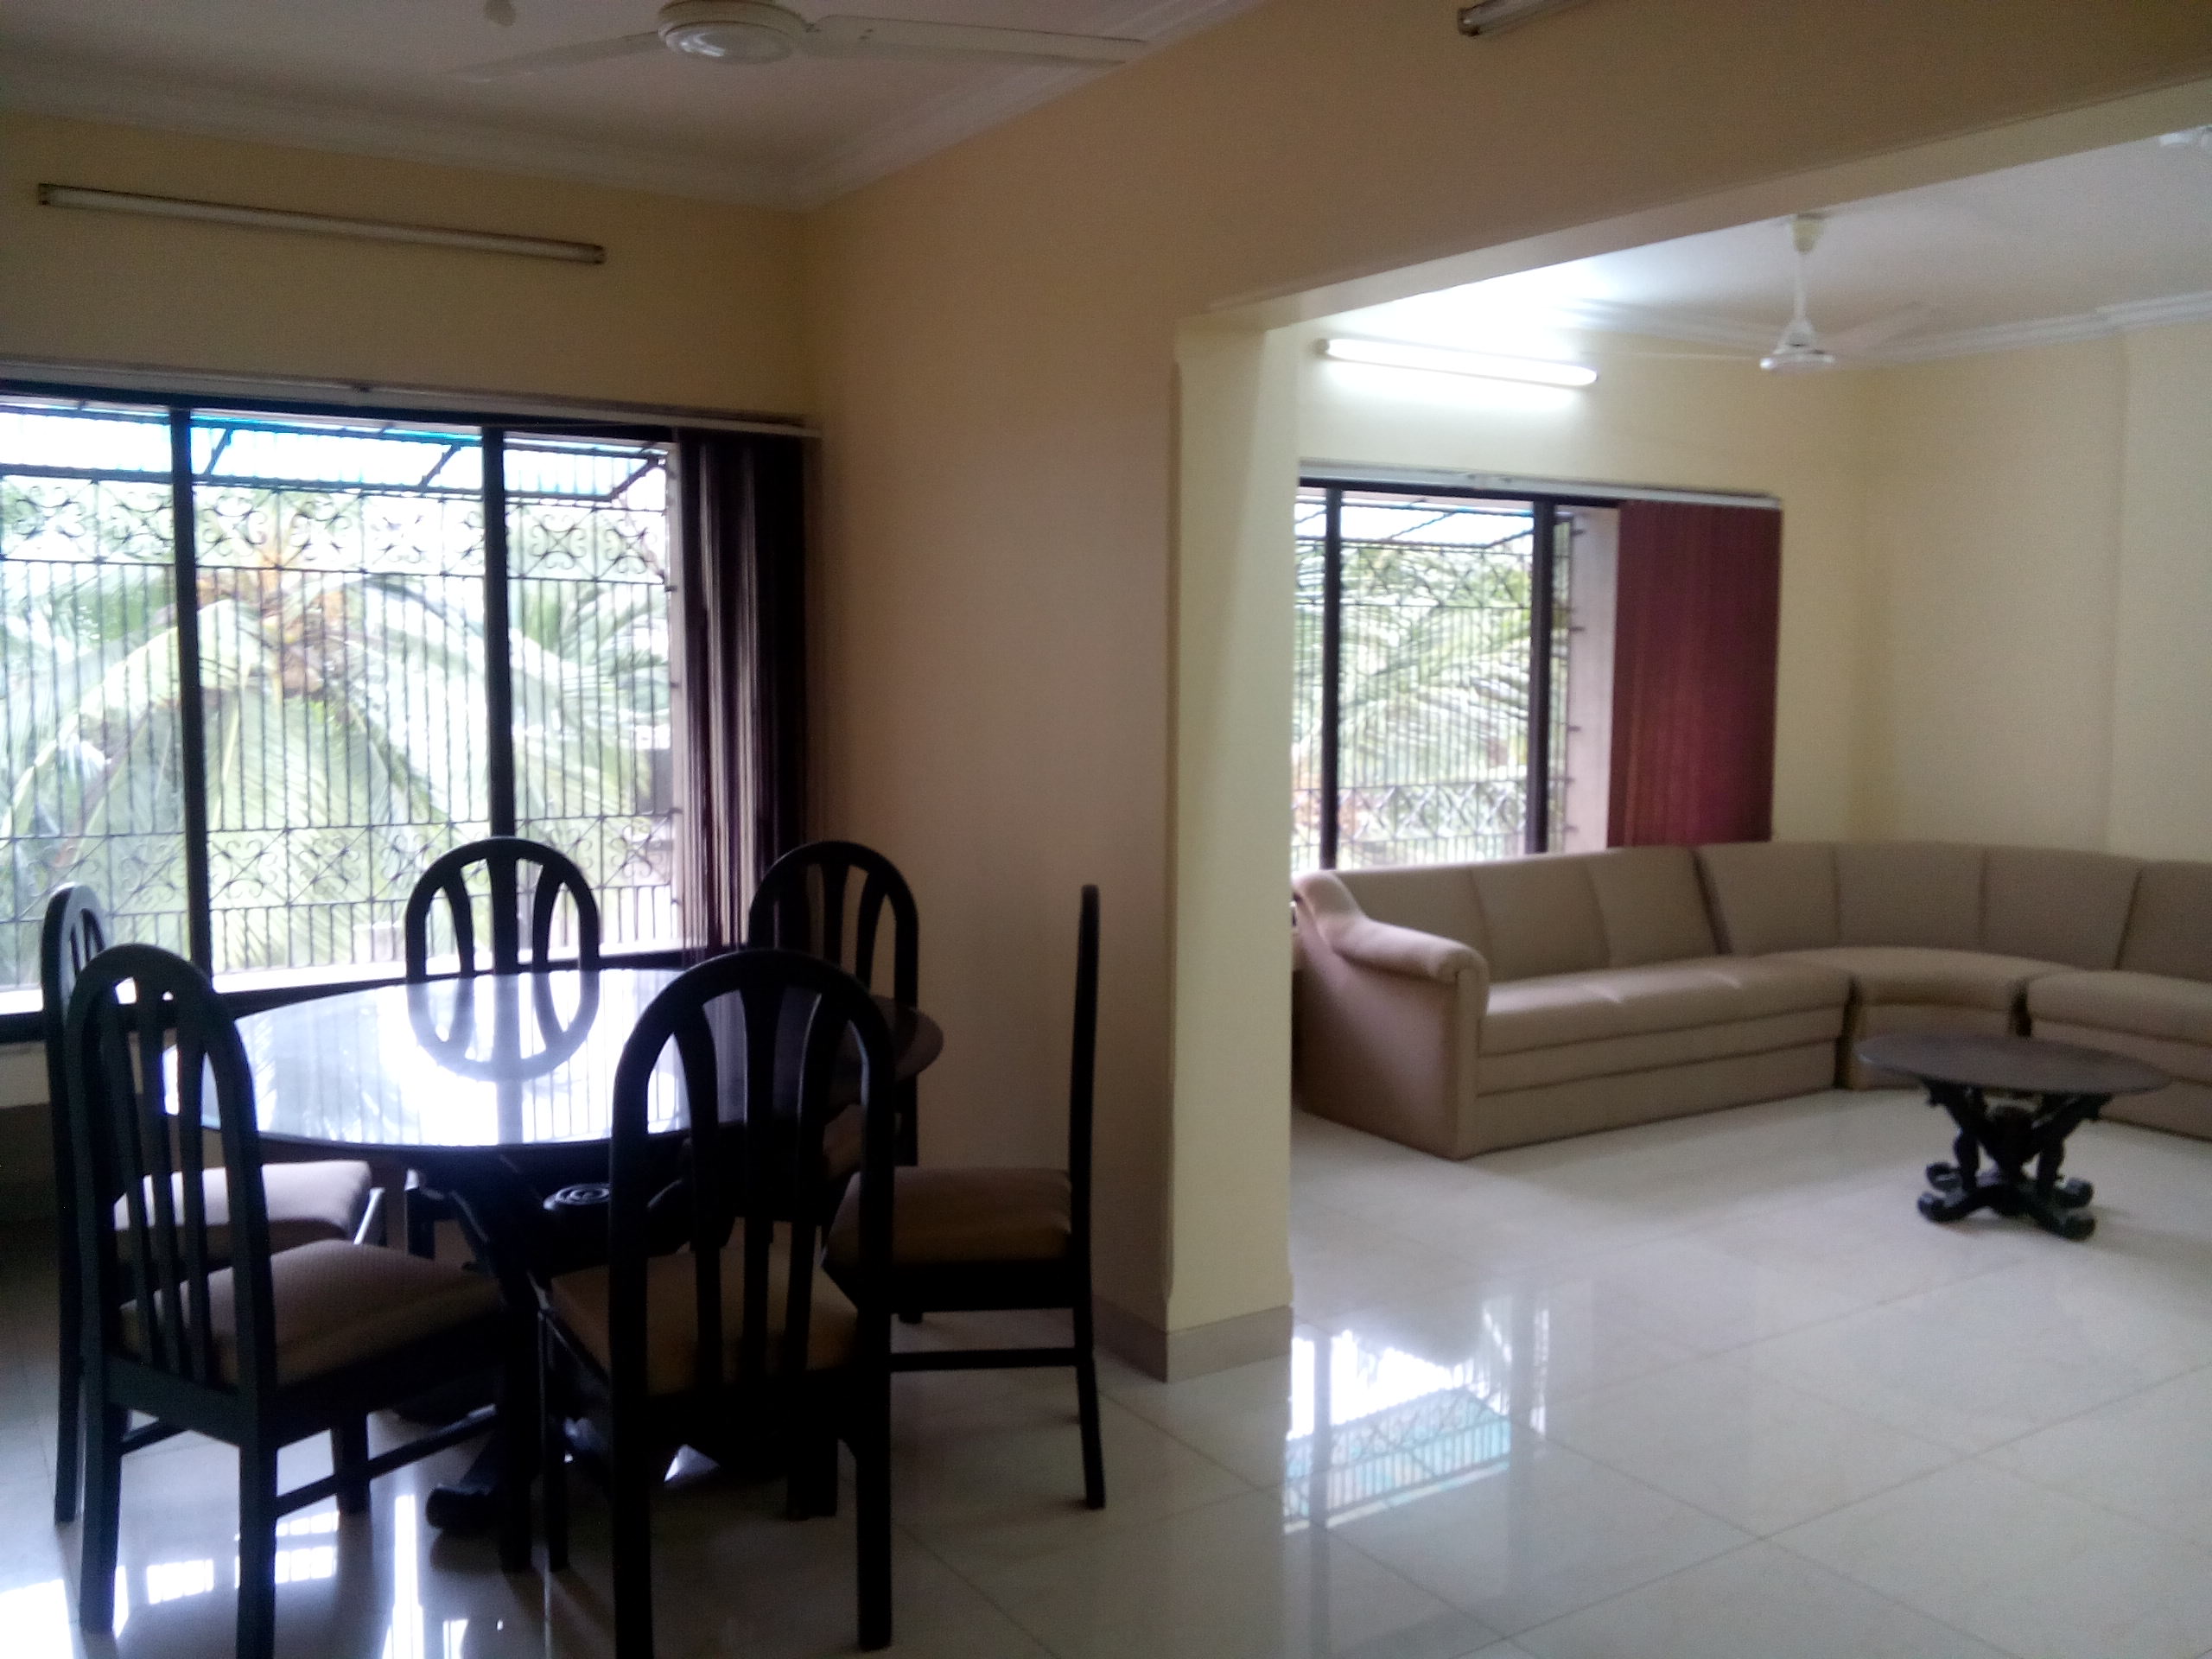 Residential Multistorey Apartment for Rent in 13th Road, Khar West, Mumbai- 400052 , Khar Road-West, Mumbai